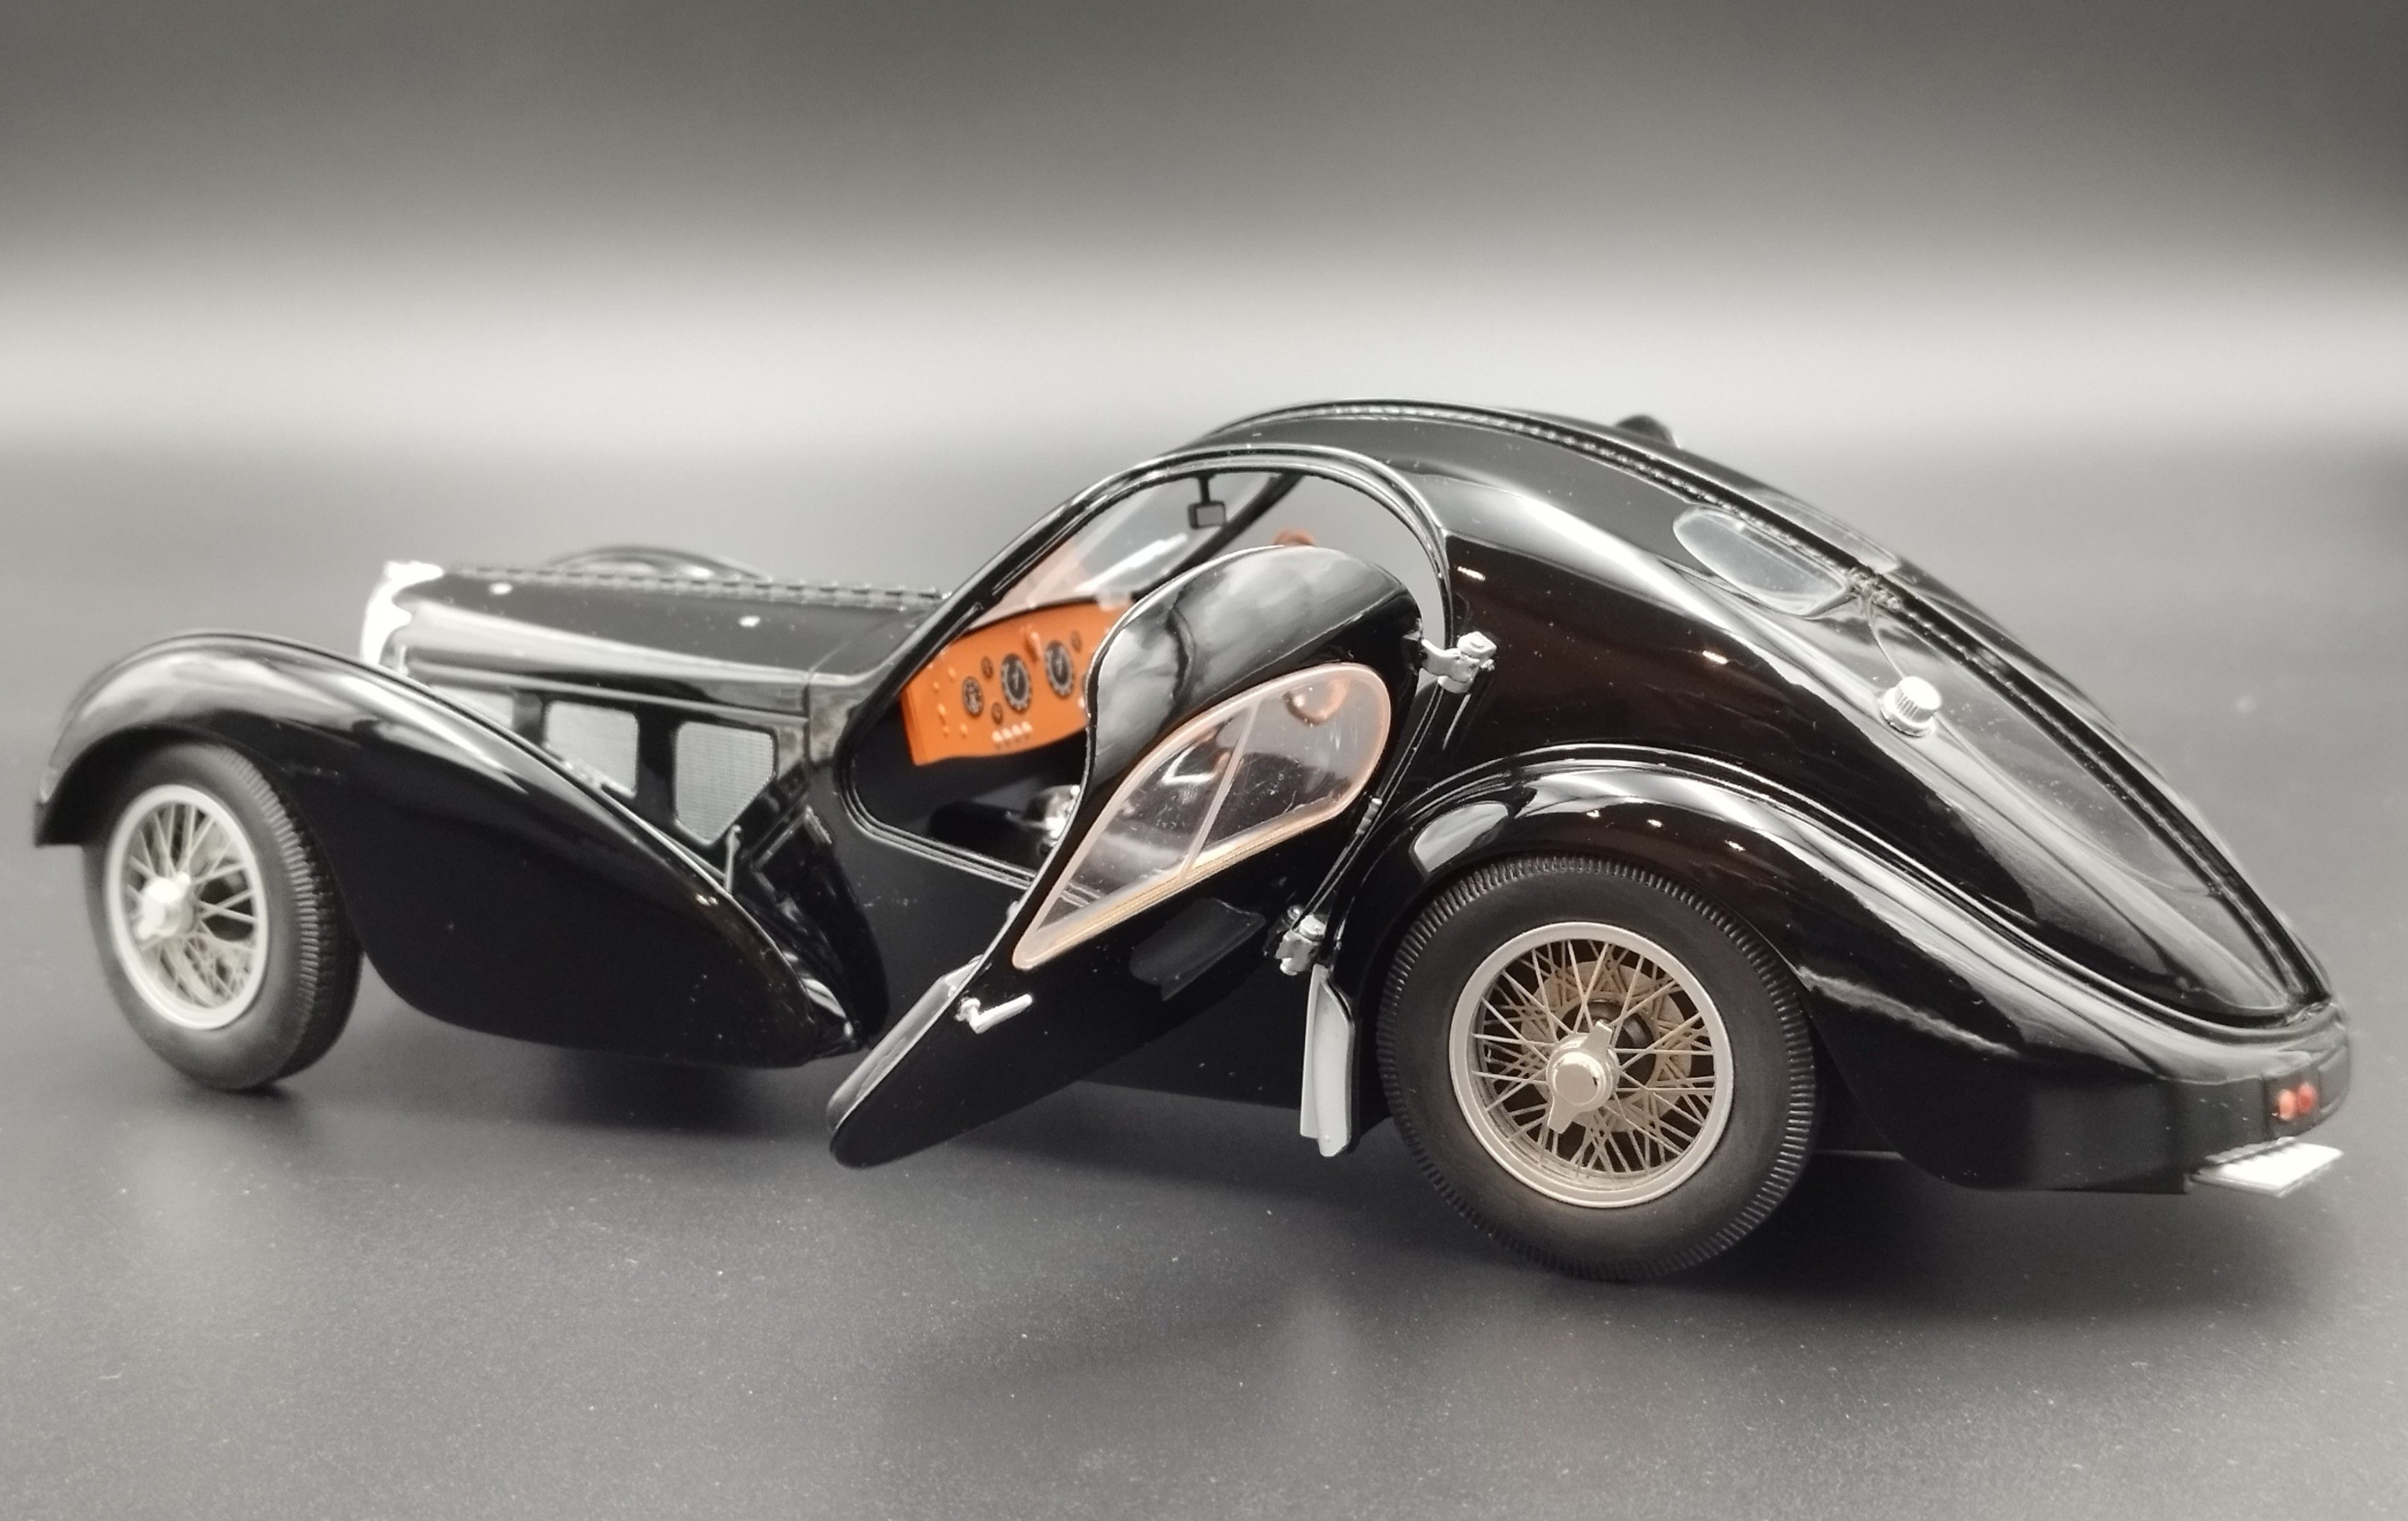 1:18 Solido 1937 Bugatti Type 57 Atlantic Black model nowy